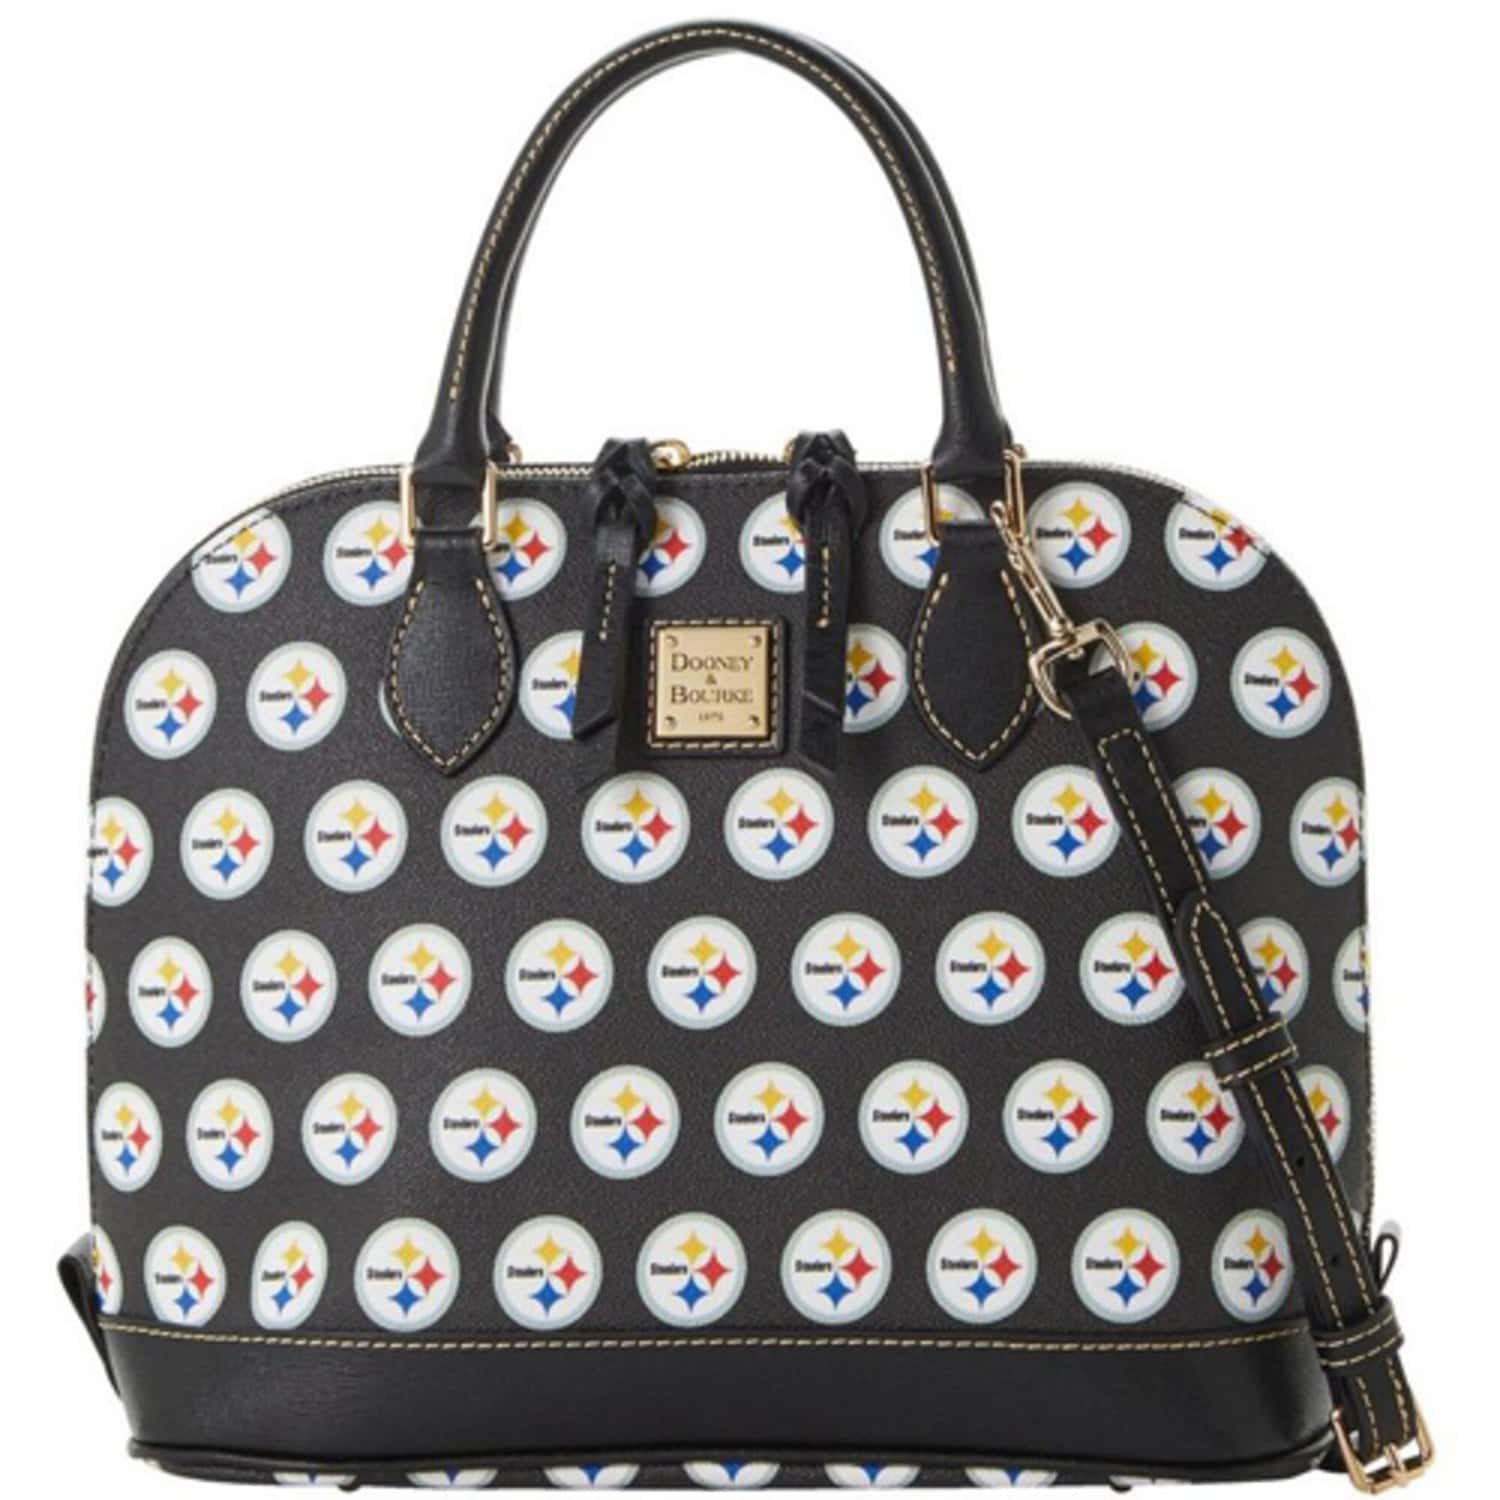 Pittsburgh Steelers inspired logo designer purse